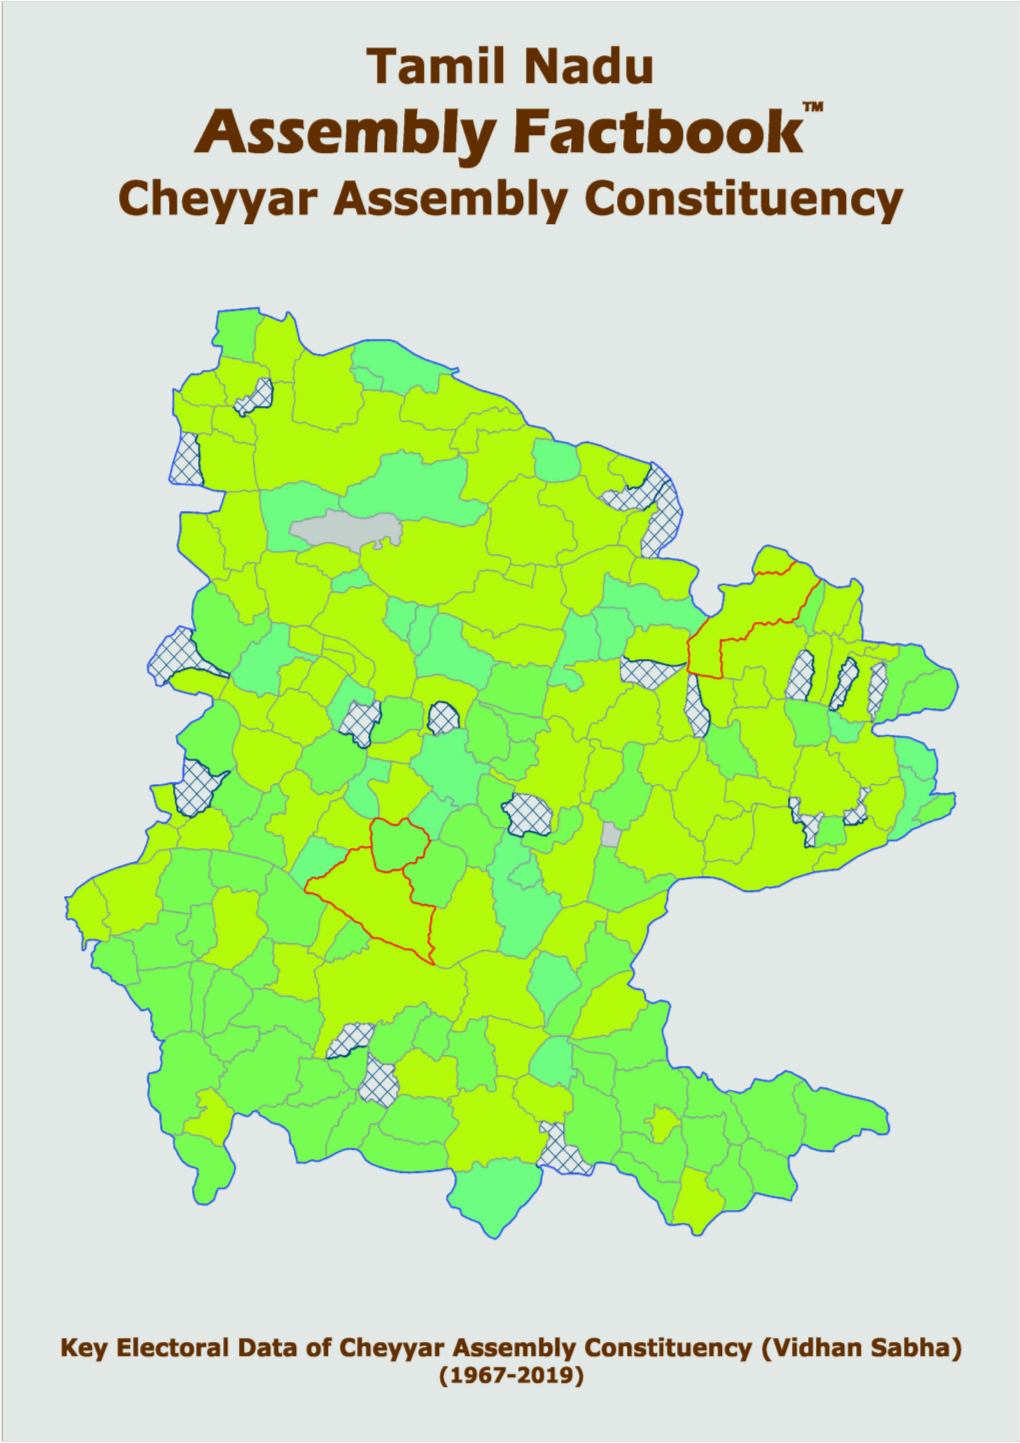 Cheyyar Assembly Tamil Nadu Factbook